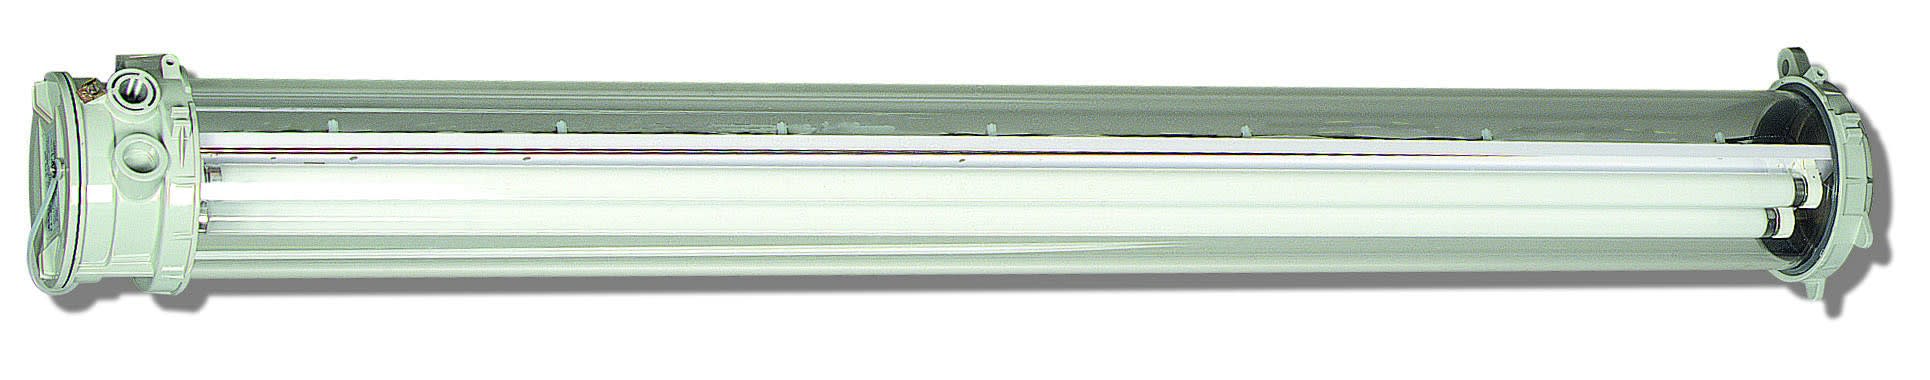 Atx - FD - Luminaire fluorescent 2x36W M20 ATEX - IECEx Zone 1-21